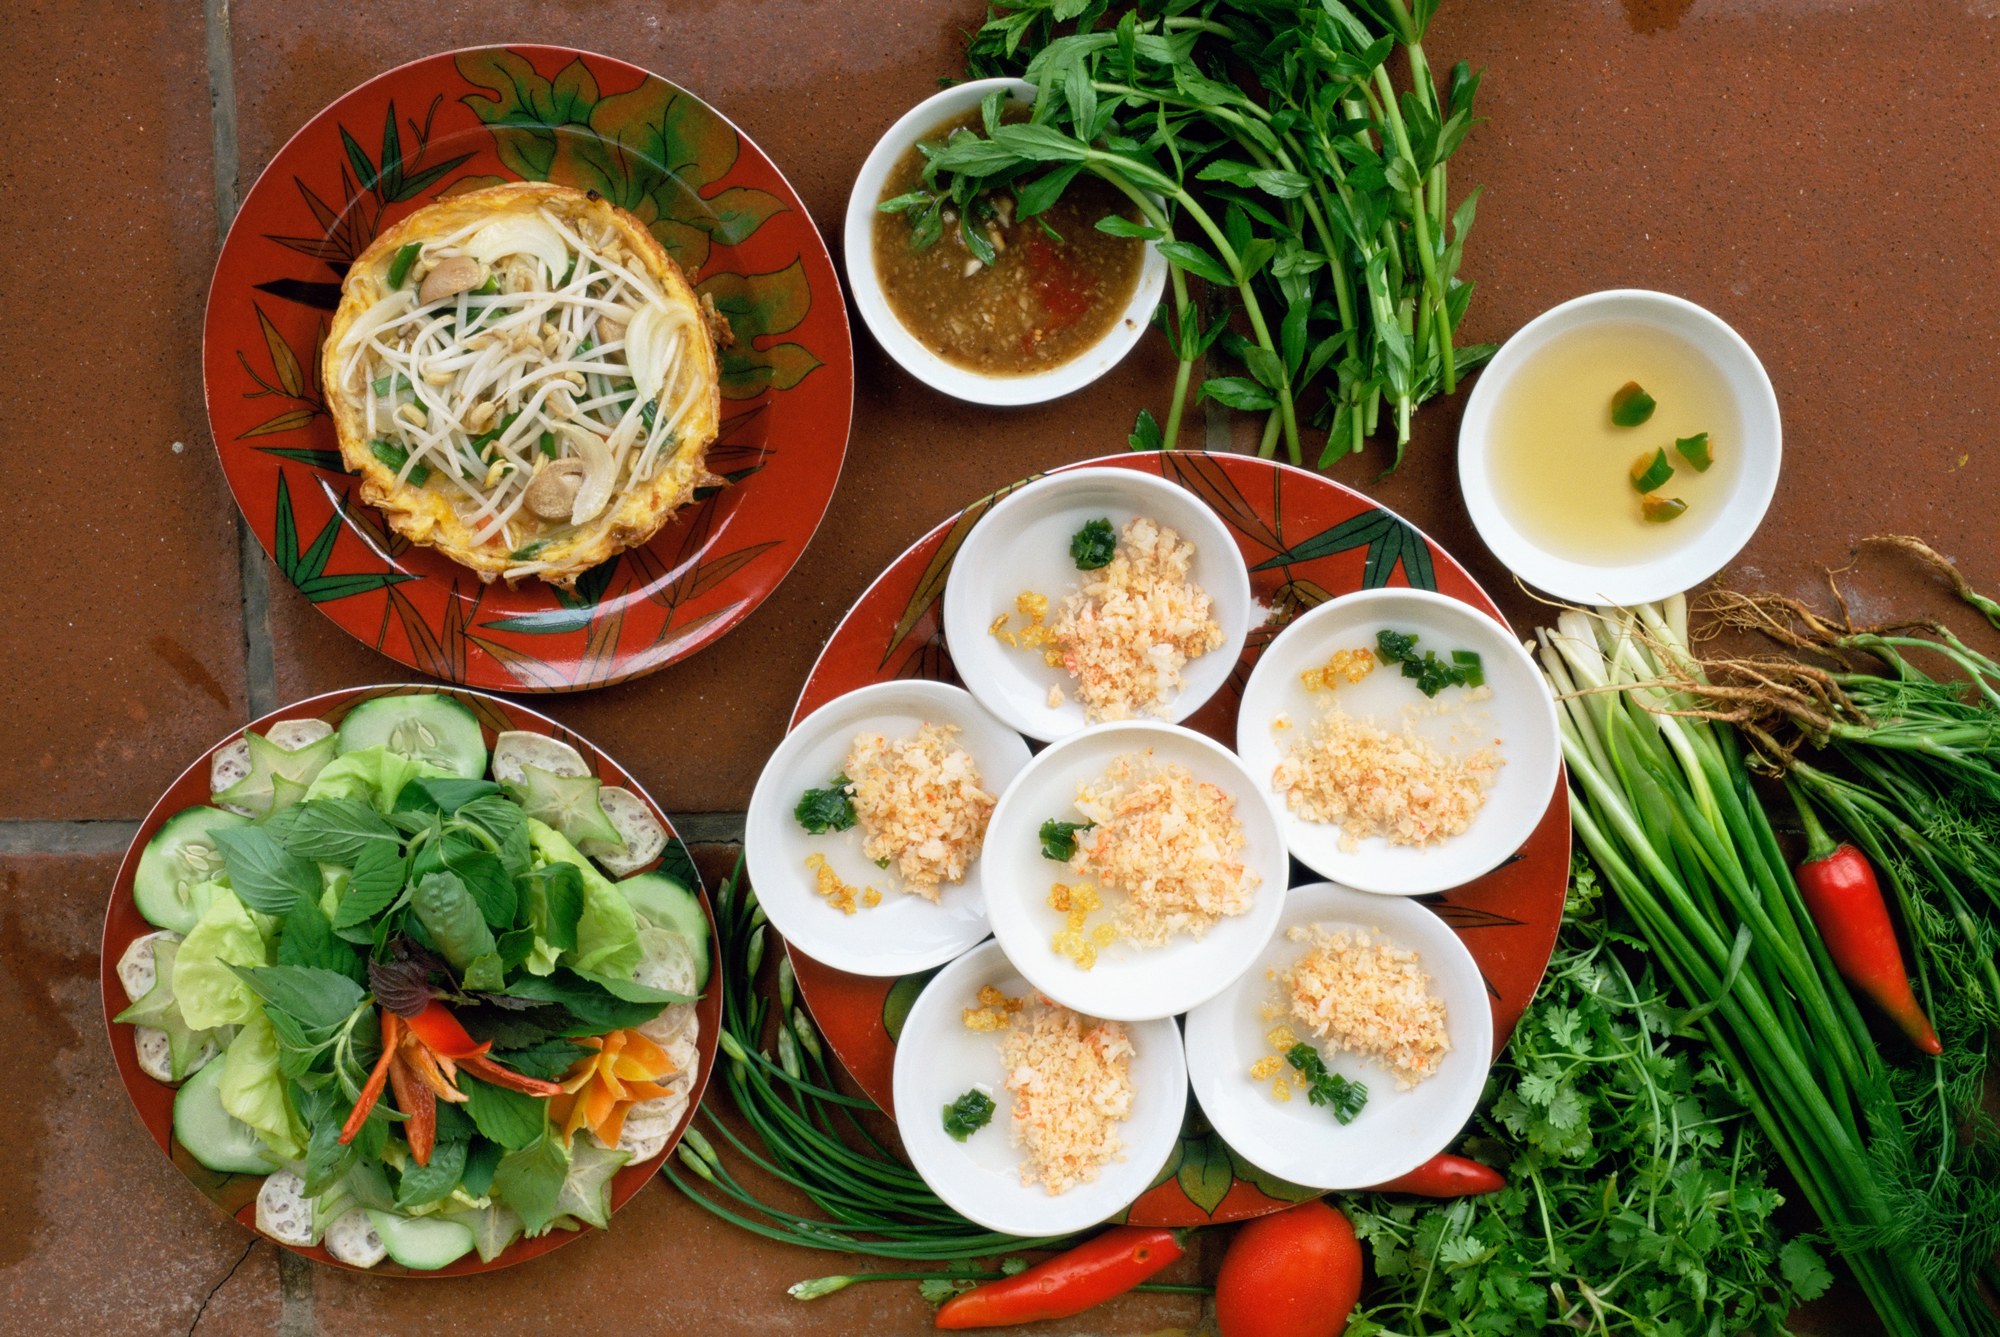 http://nhatlam.com.vn/en/wp-content/uploads/2018/03/vietnamese-food-banh-beo.jpg